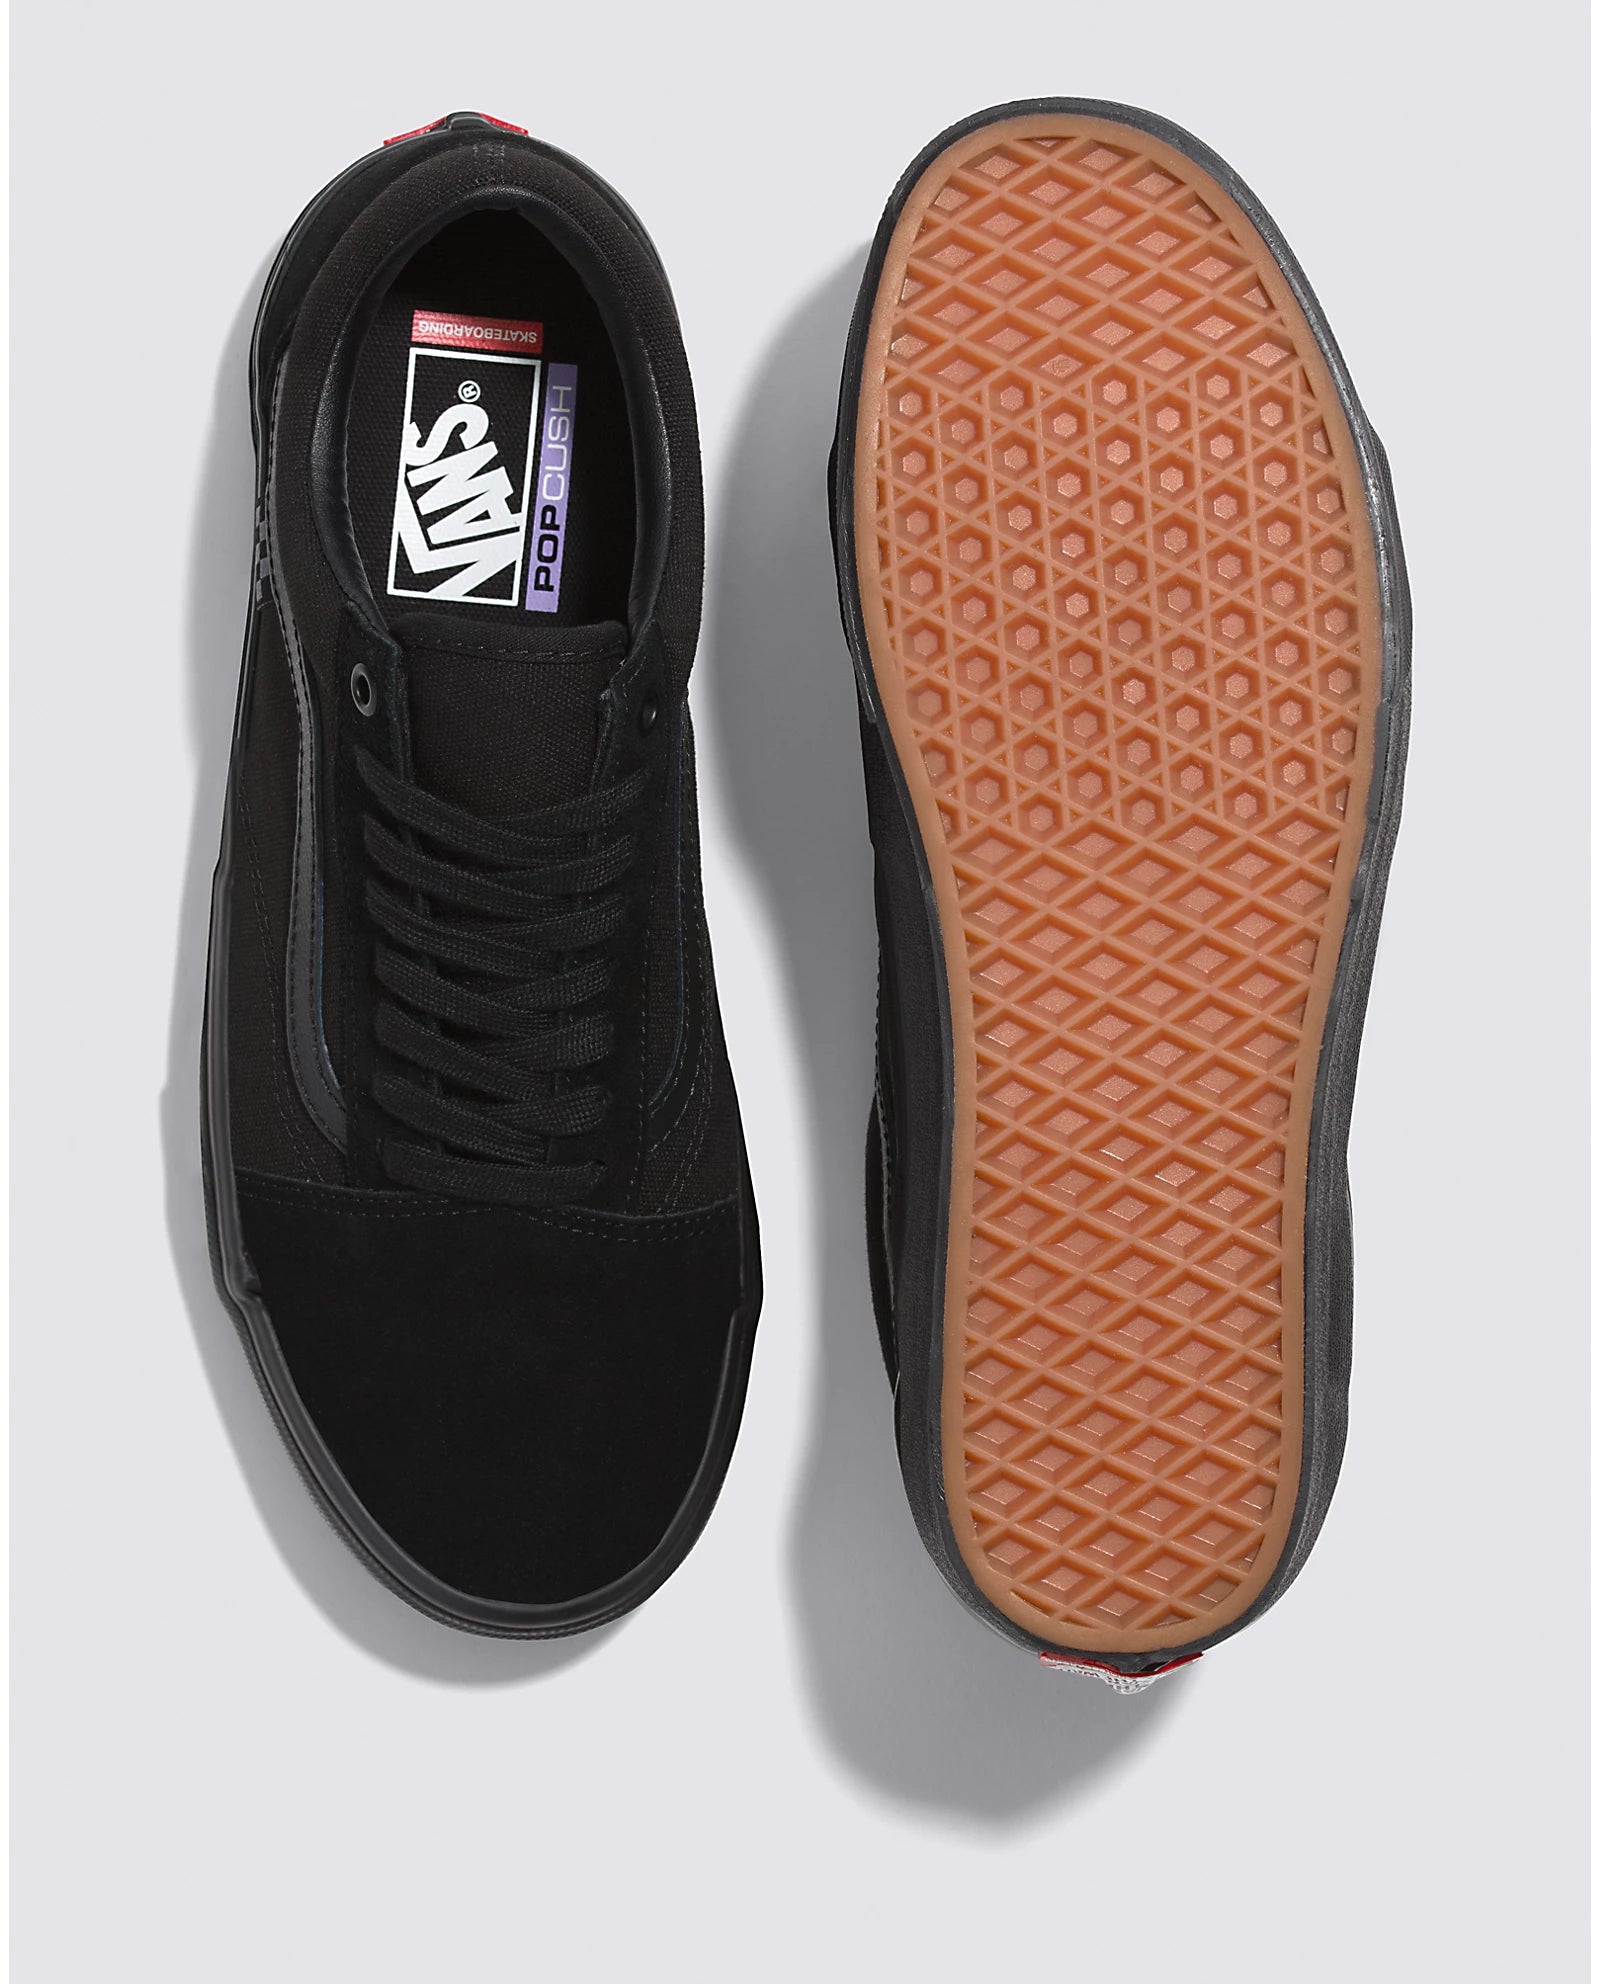 Black/Black Vans Skate Old Skool Skate Shoes Top/Bottom